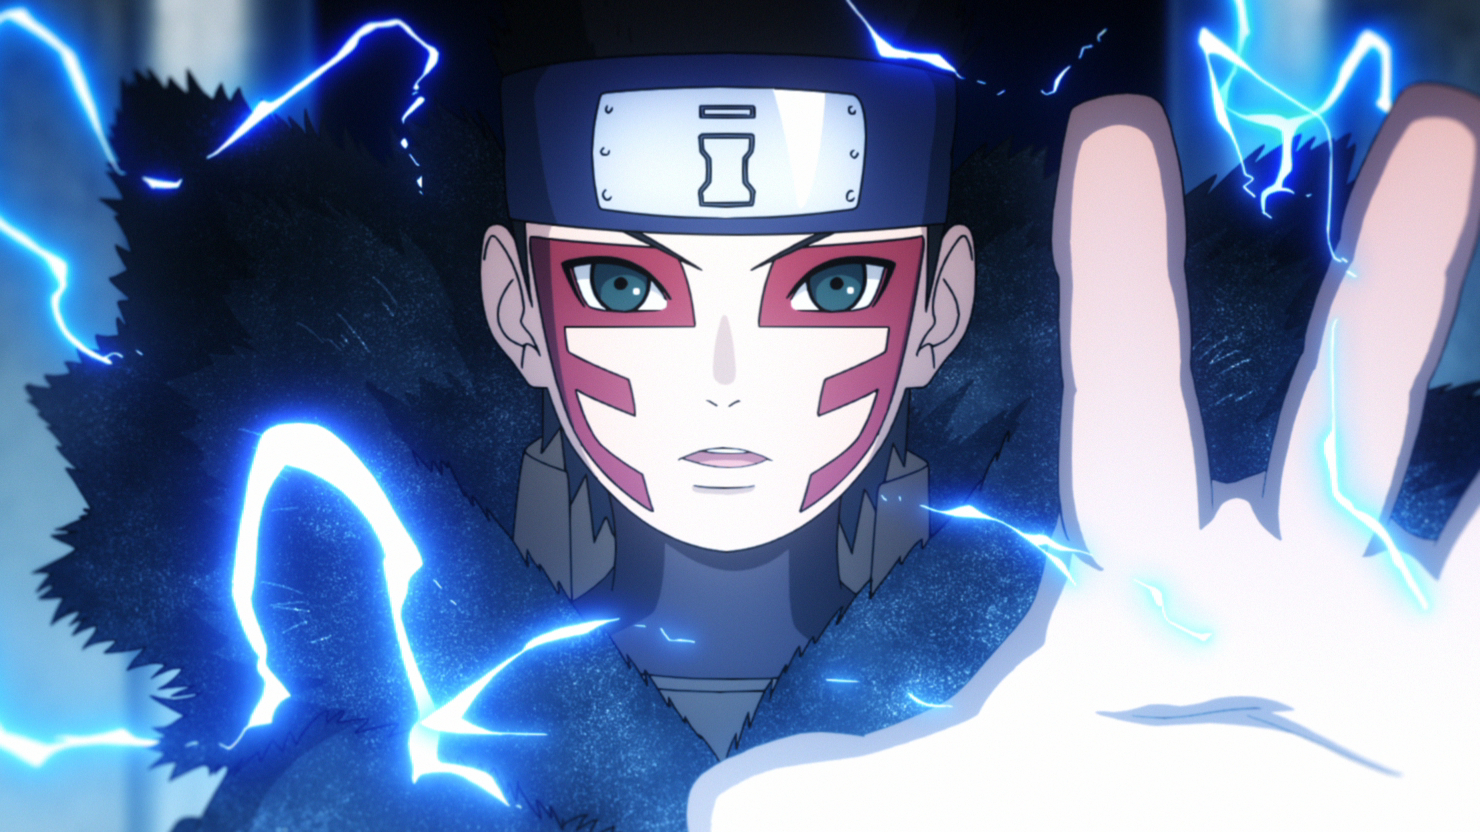 Boruto: Naruto Next Generations - Volume 4: Episode 51-70 Blu-ray Image 4